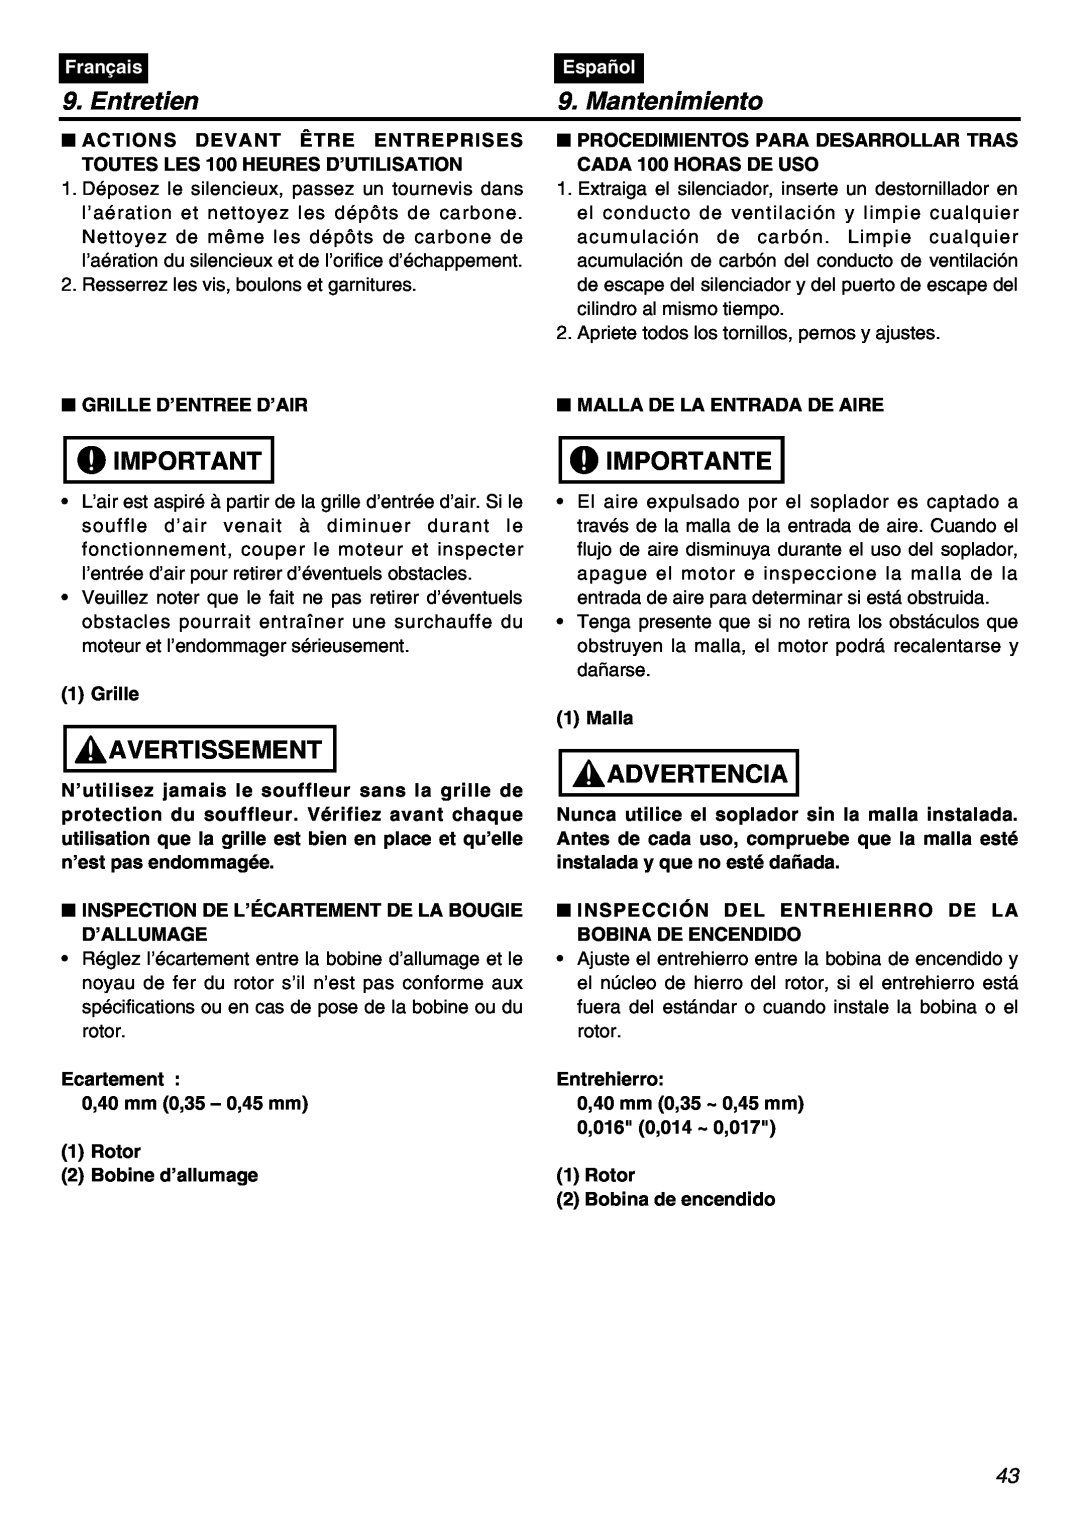 RedMax EBZ7100RH-CA, EBZ7100-CA Entretien, Mantenimiento, Avertissement, Importante, Advertencia, Français, Español 